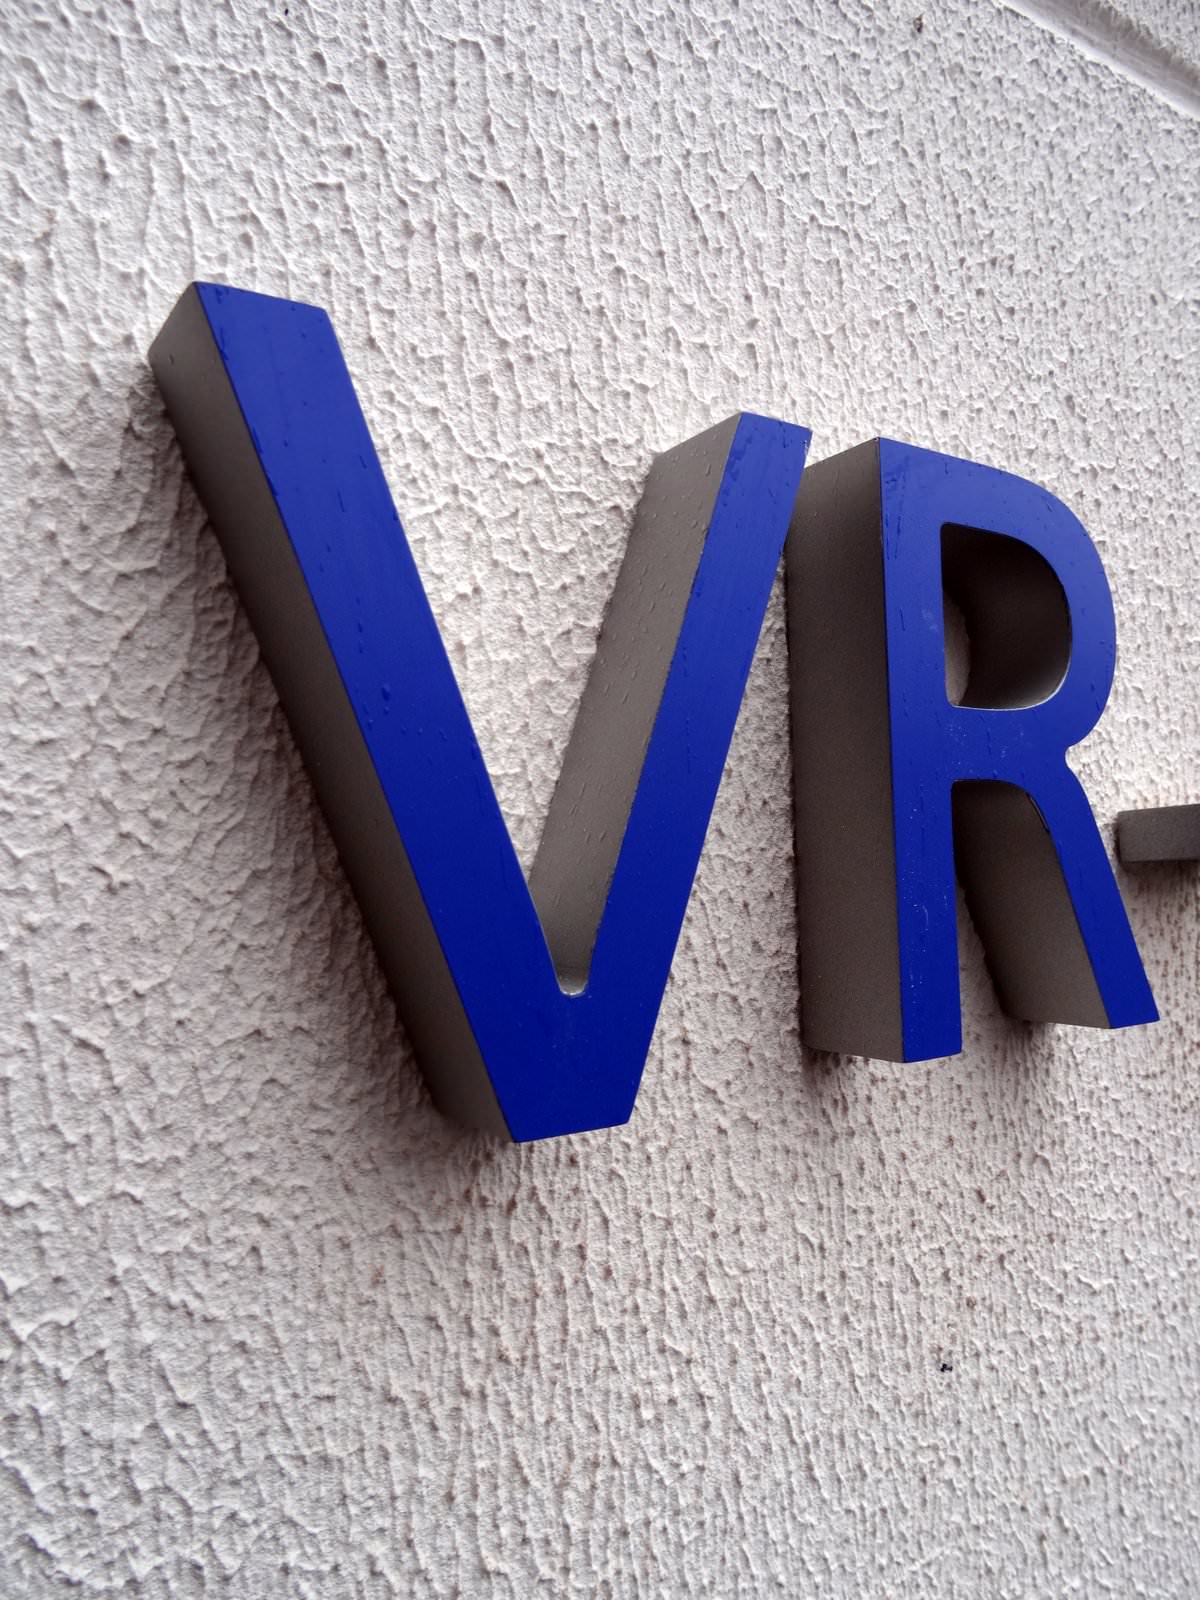 LED Vollacrylwerbeanlage Profilbuchstaben VR Bank2